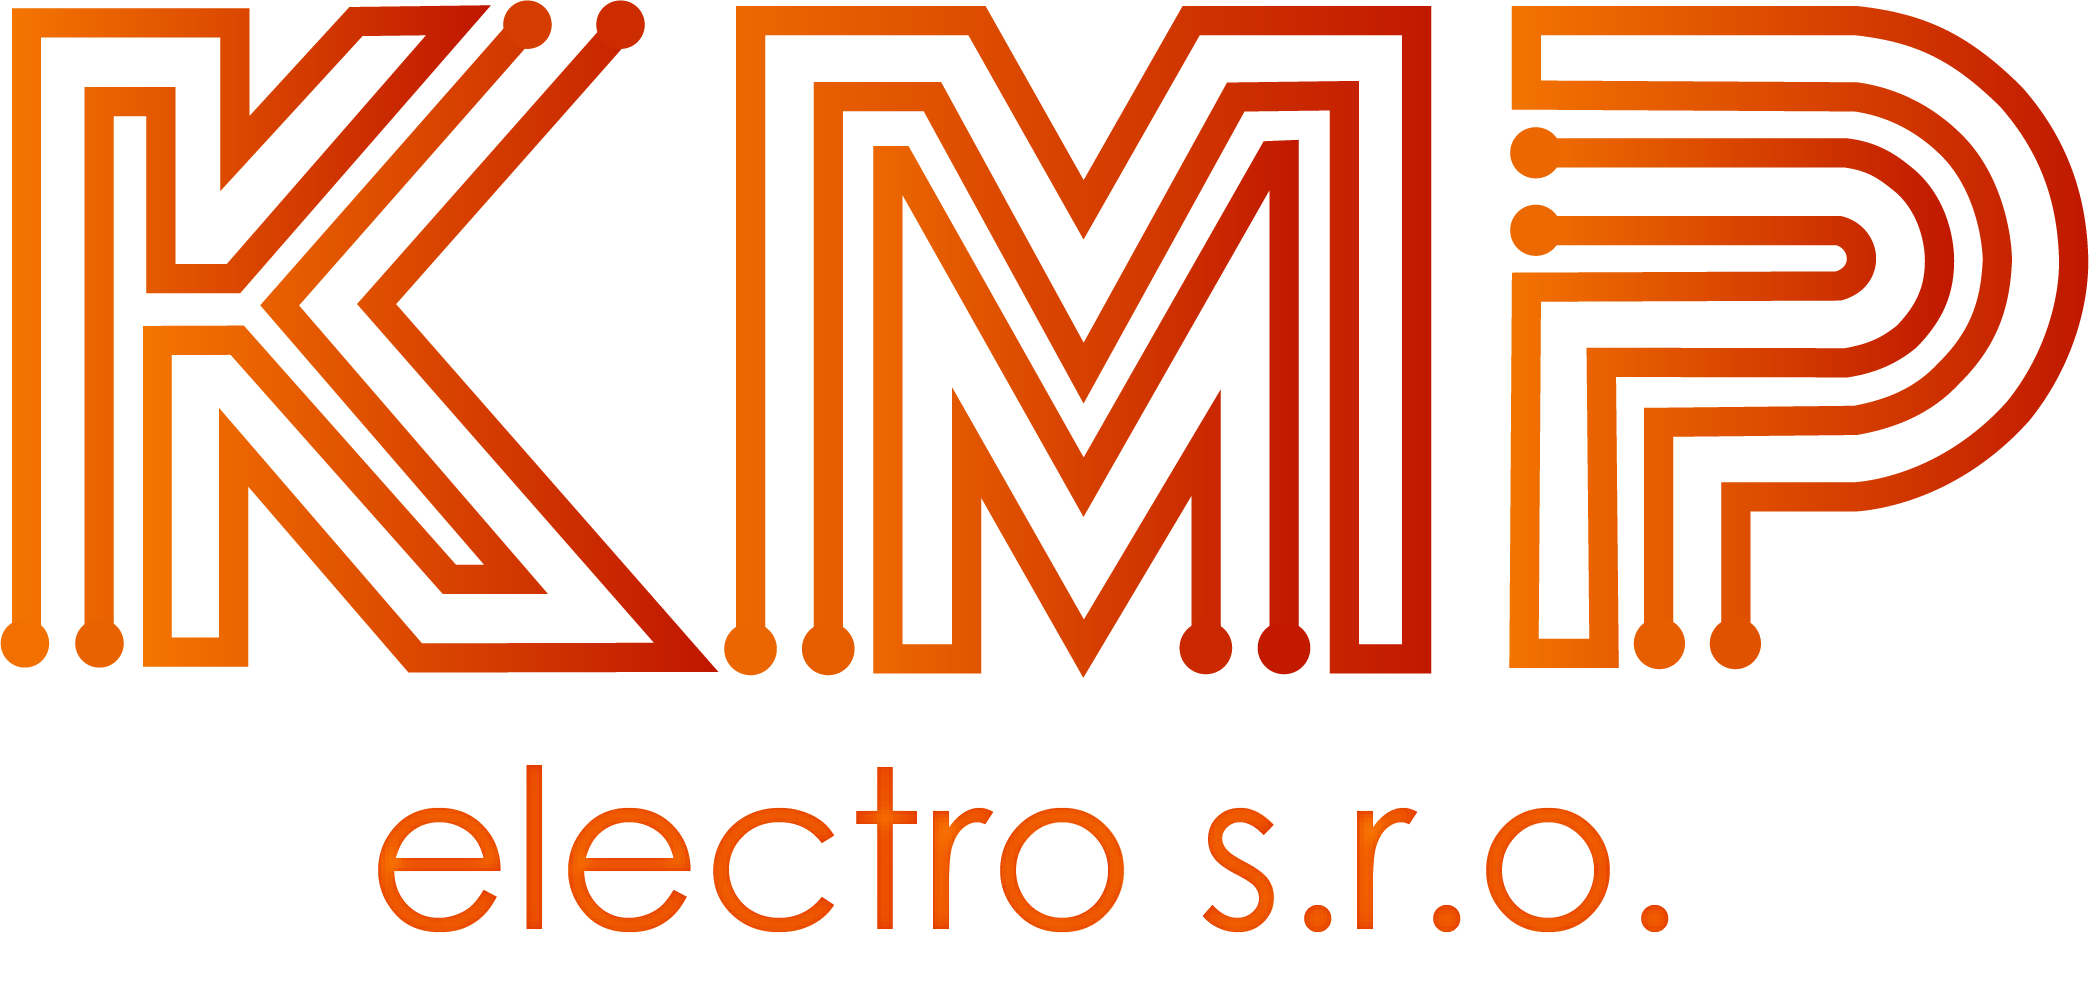 KMP electro s.r.o.